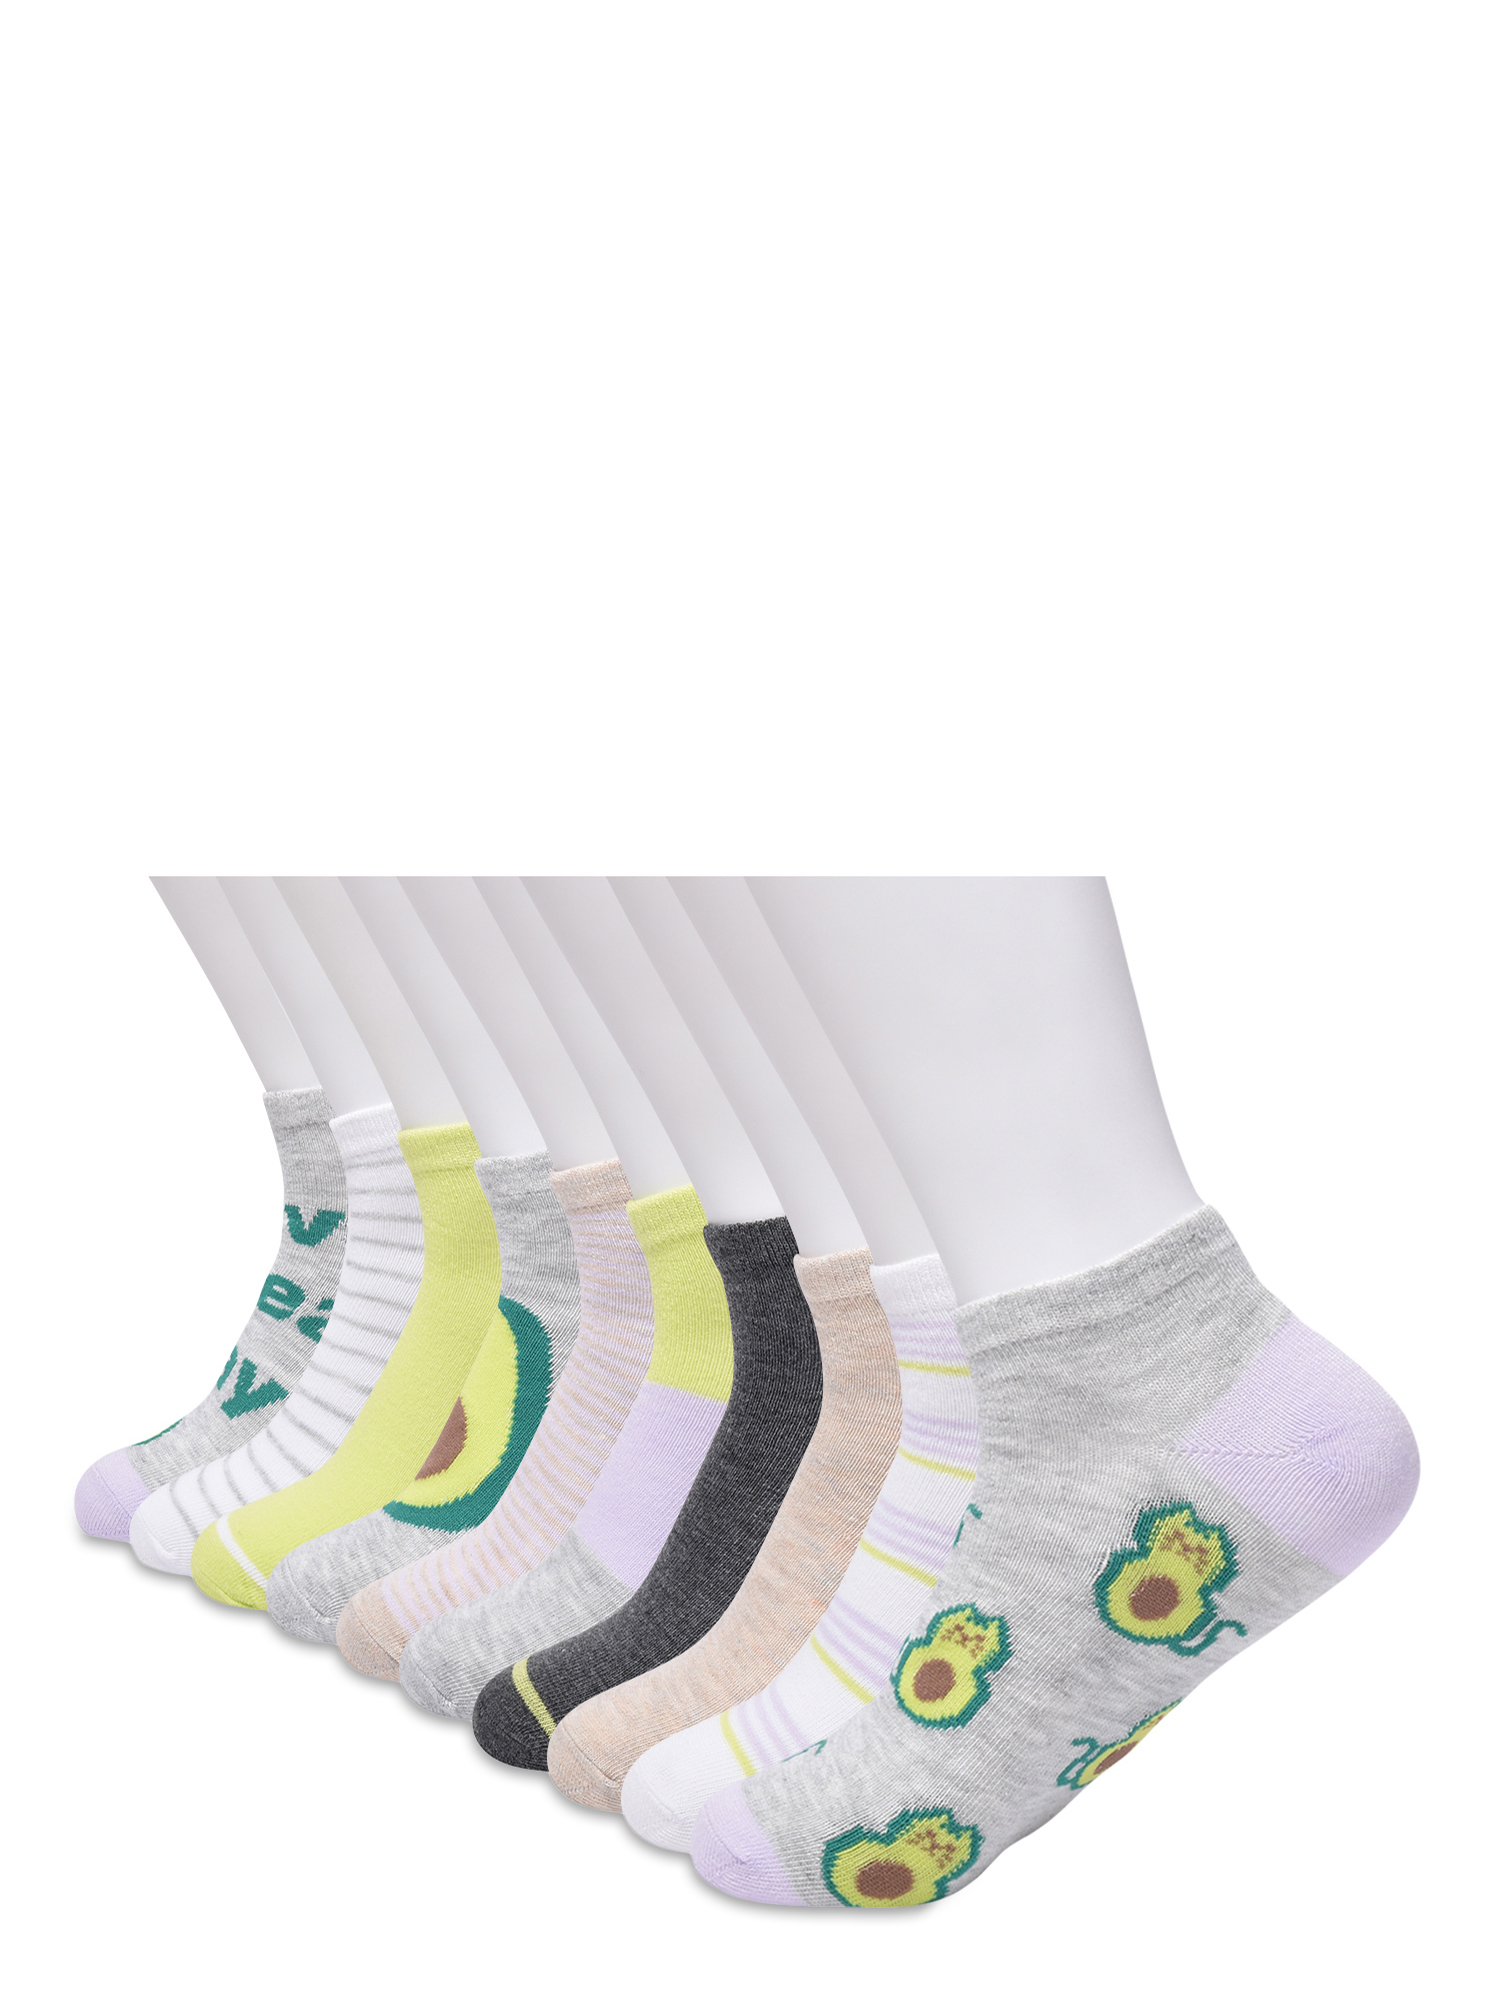 No Boundaries Women's Low-Cut Socks, 10-Pack, Sizes 4-10 - image 4 of 5